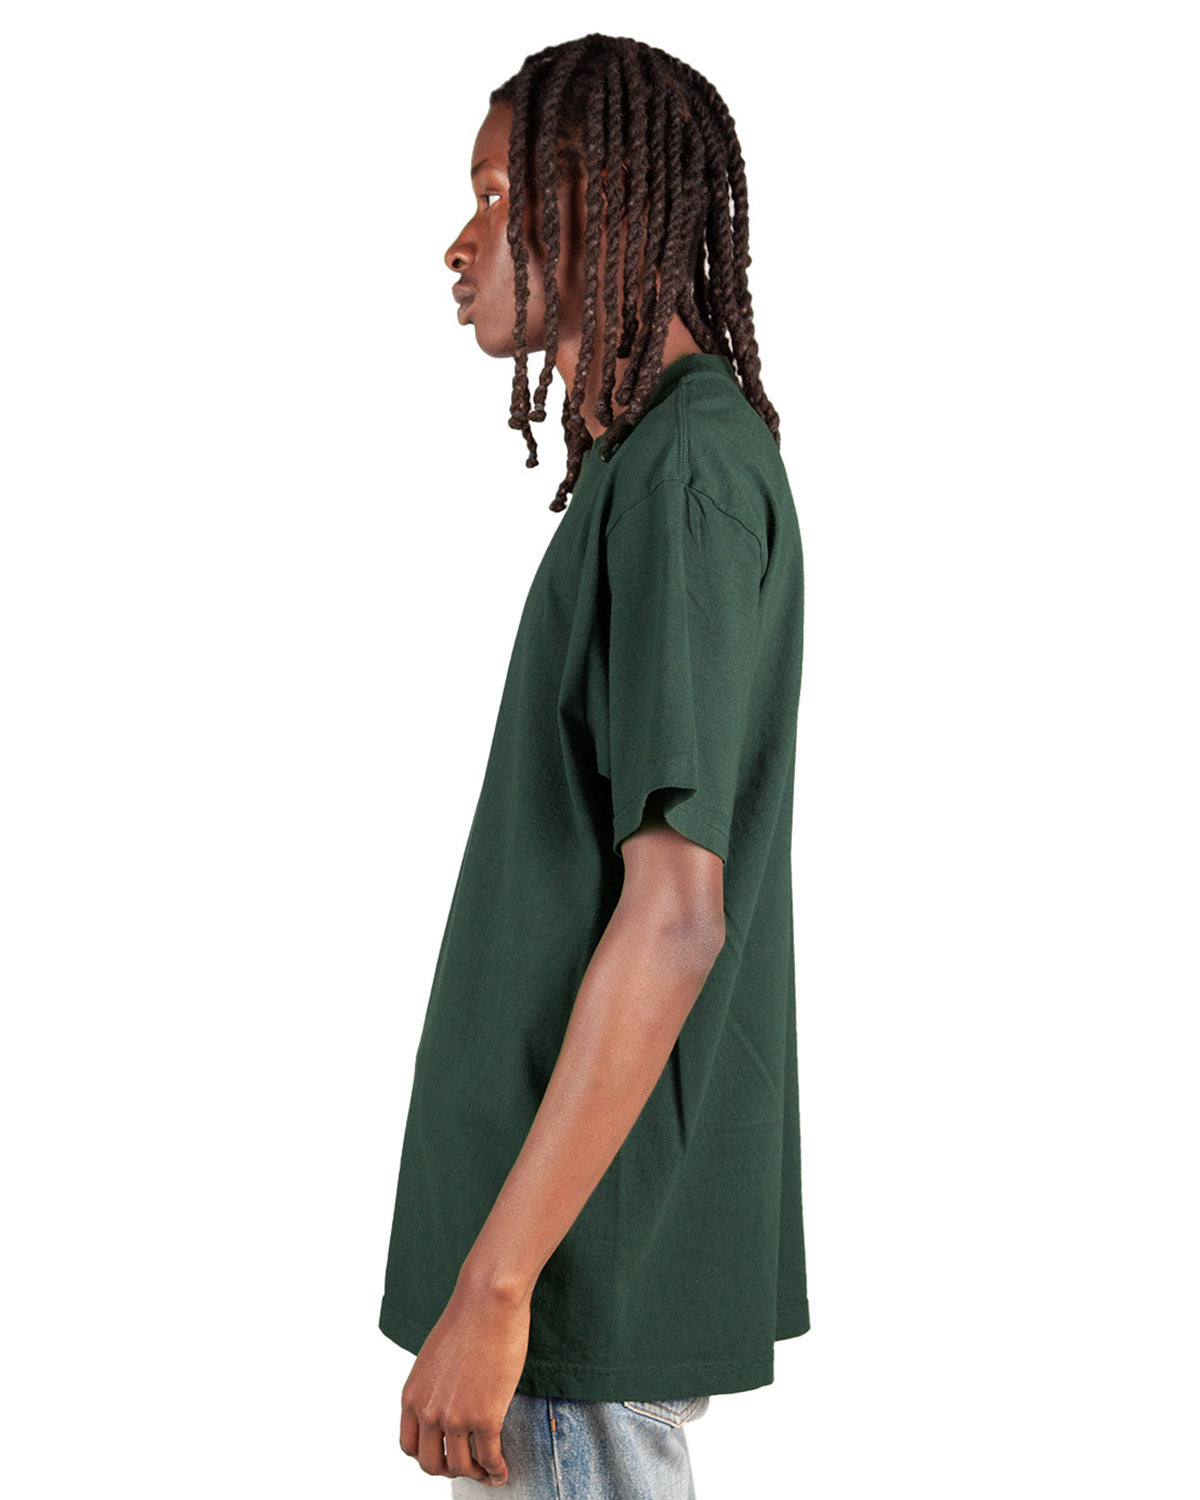 Shaka Wear Garment-Dyed Crewneck T-Shirt